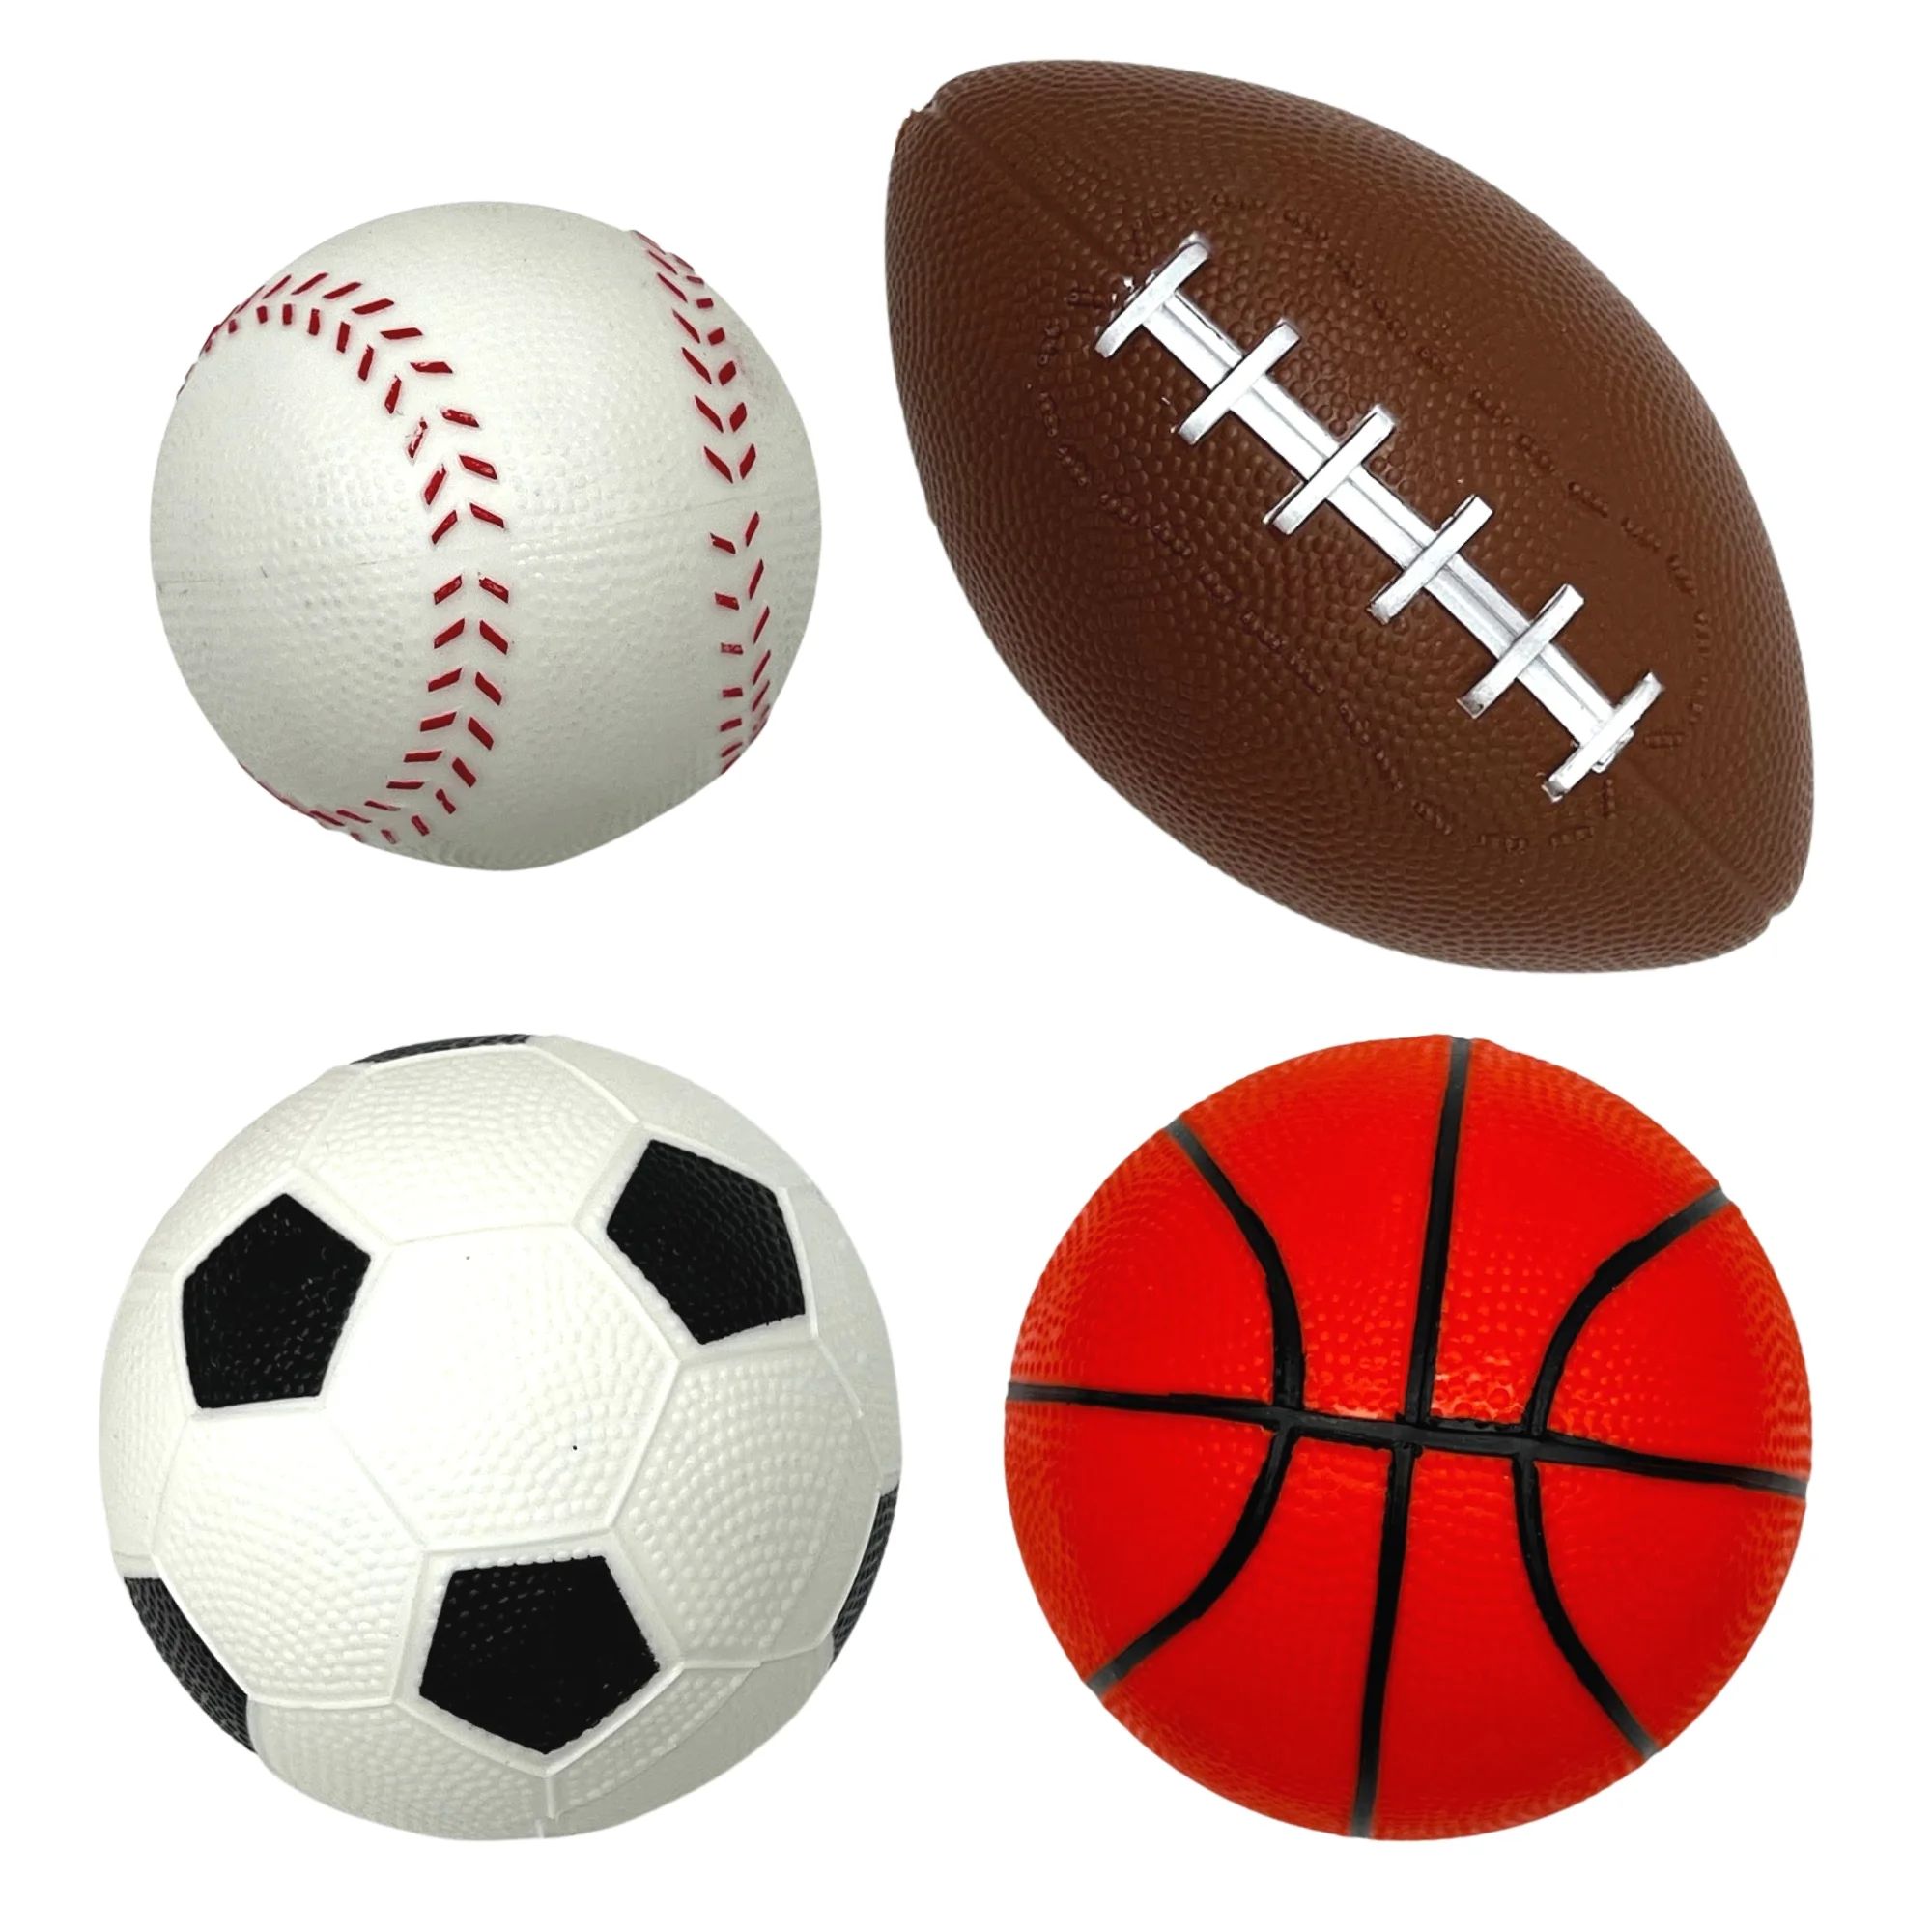 Play Day Mini Sports Balls, 4-Pack, Rubber Baseball, Basketball, Football, and Soccer Ball, Ages ... | Walmart (US)